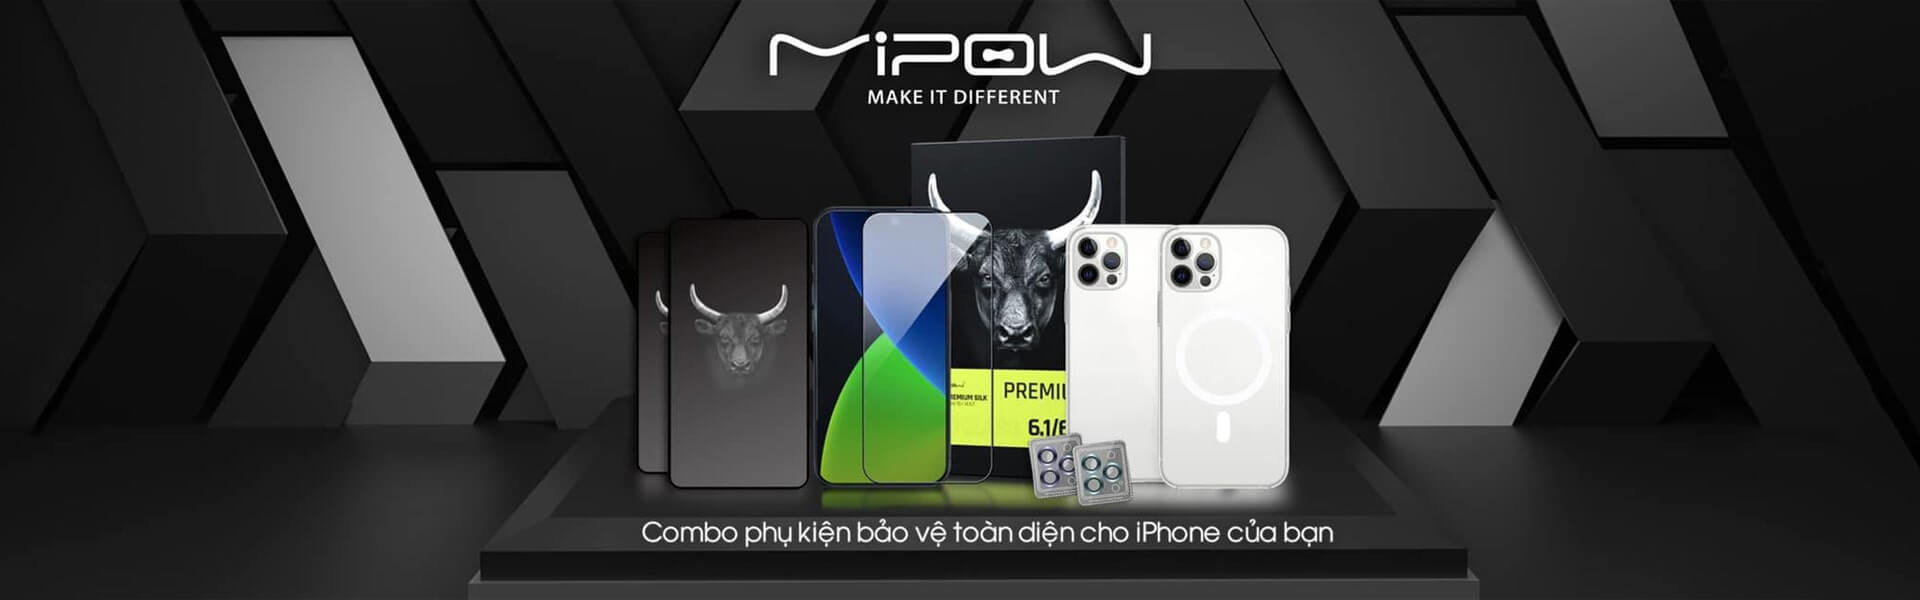 Mipow Việt Nam - Make It Different - Kingbull - Powerbank - Living